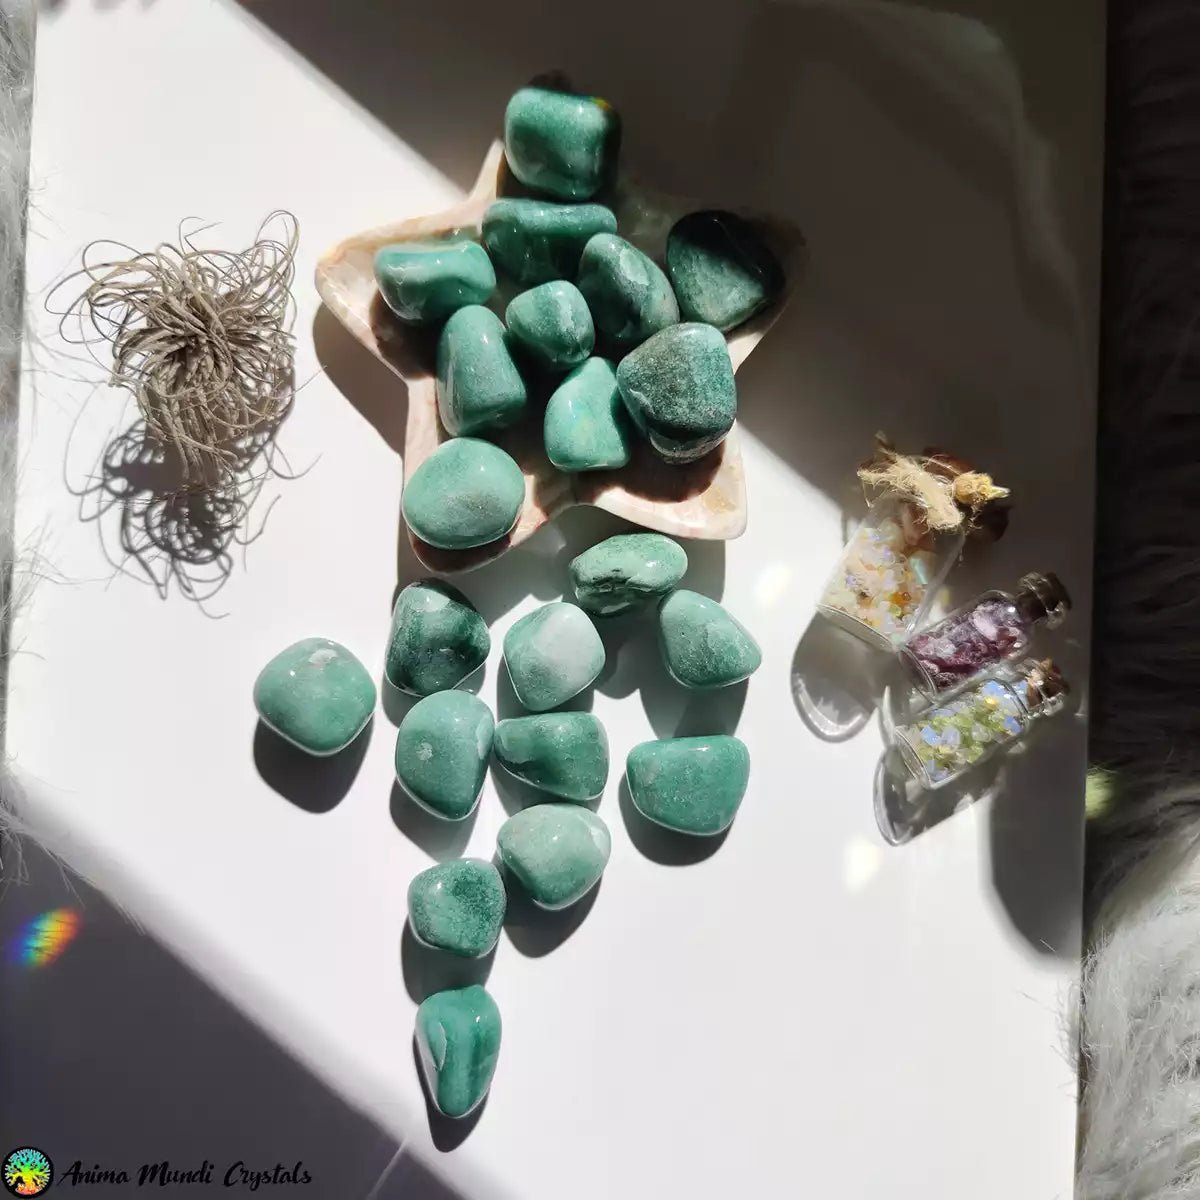 Cuarcita Verde- Piedras caídas de Aventurina - Cristales Anima Mundi